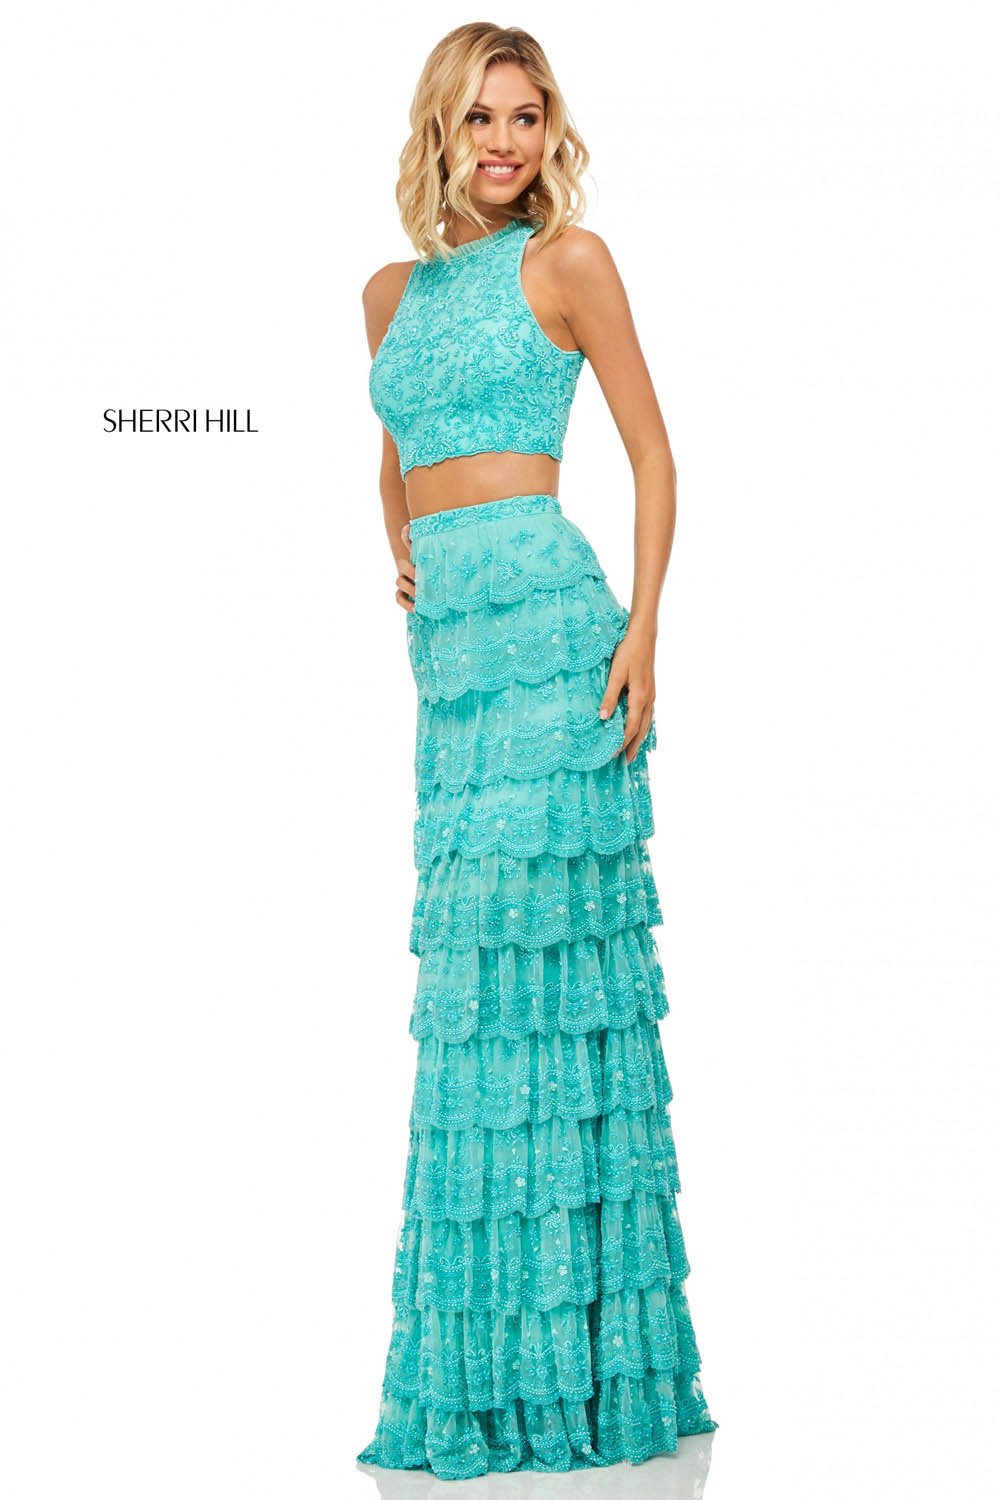 Sherri Hill 52777 dress images in these colors: Aqua.